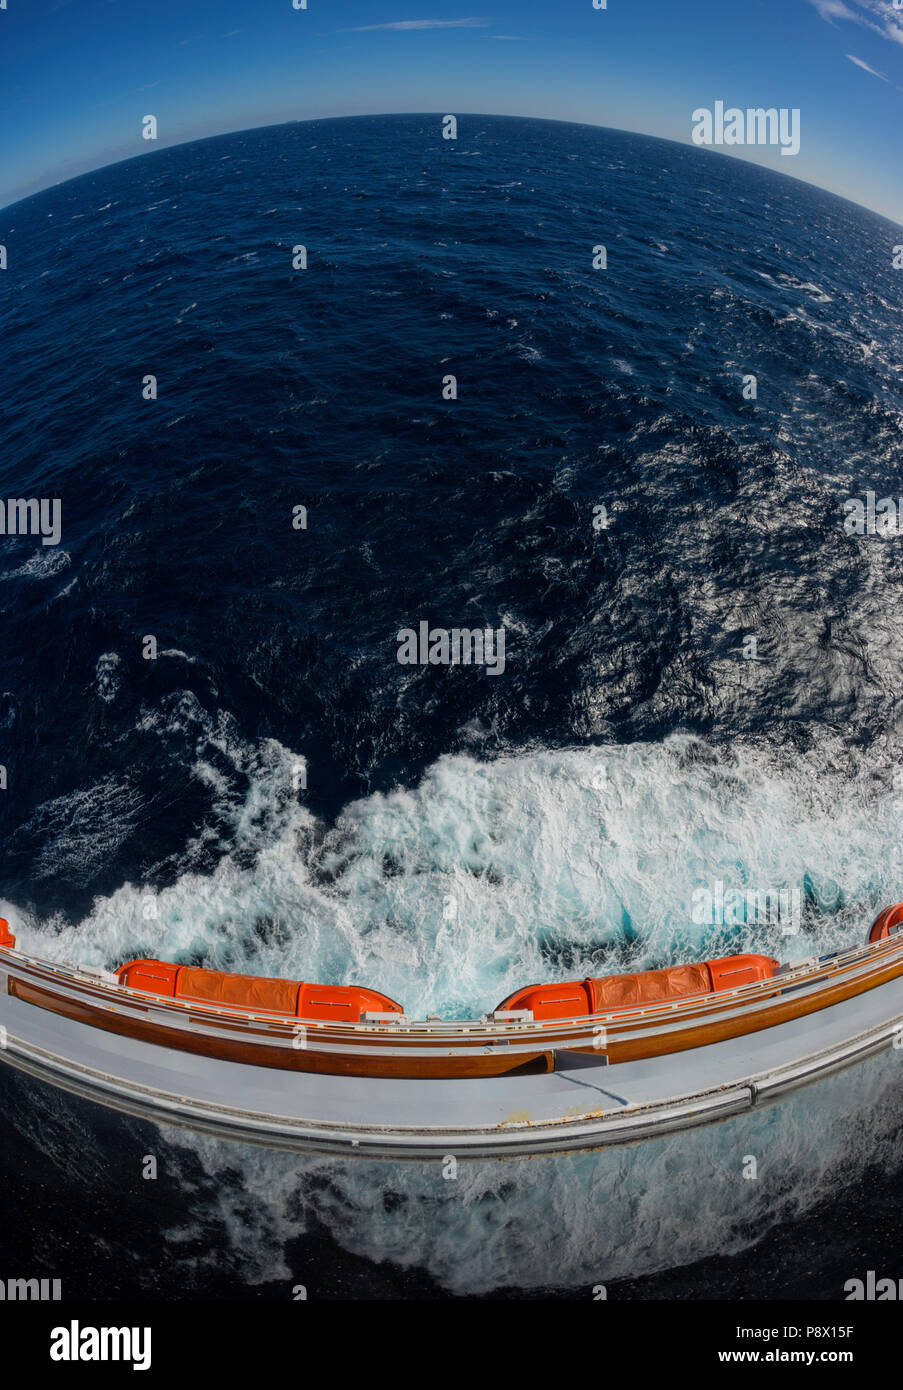 Lifeboats on Carnival Freedom cruise ship Stock Photo